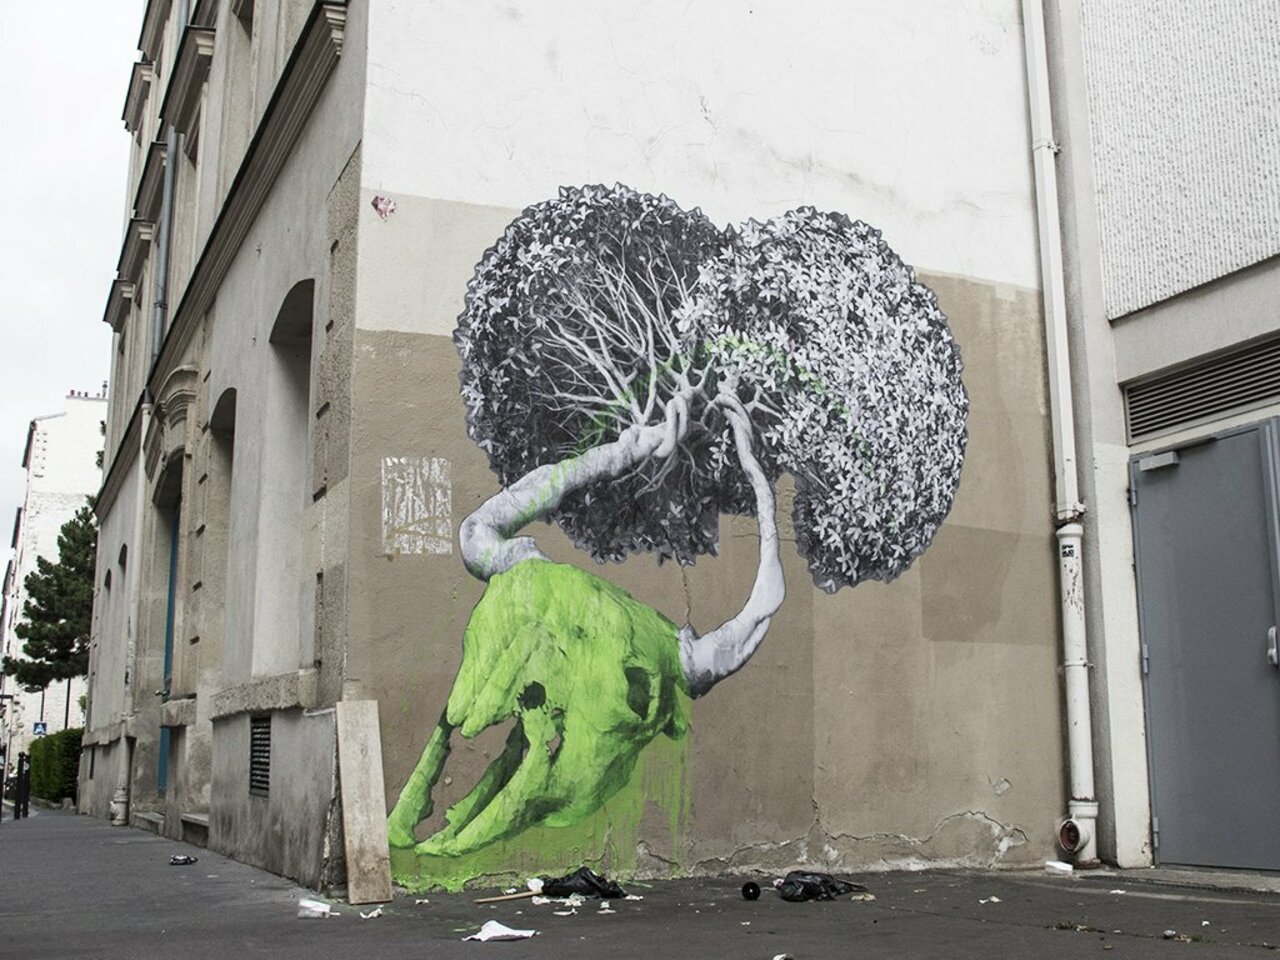 "What Is Dead May Never Die" & "Hypnos" by Ludo in Paris #streetart https://streetartnews.net/2016/07/what-is-dead-may-never-die-hypnos-by-ludo-in-paris.html https://t.co/0NY7kAageW